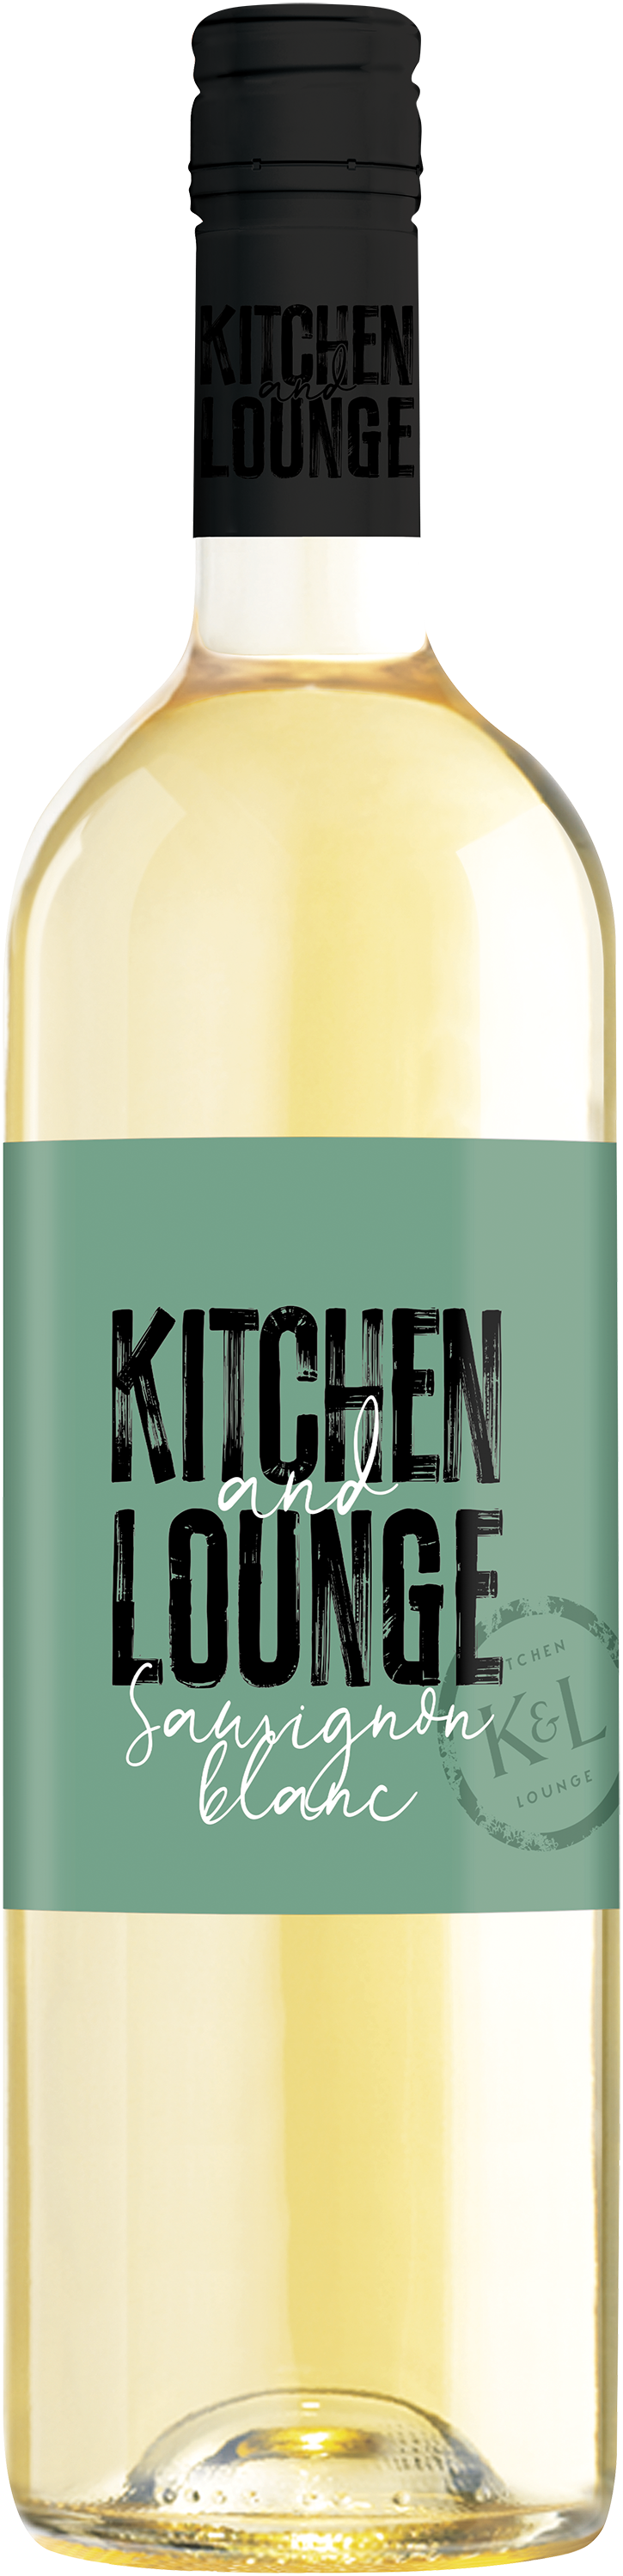 Kitchen and Lounge Sauvignon blanc